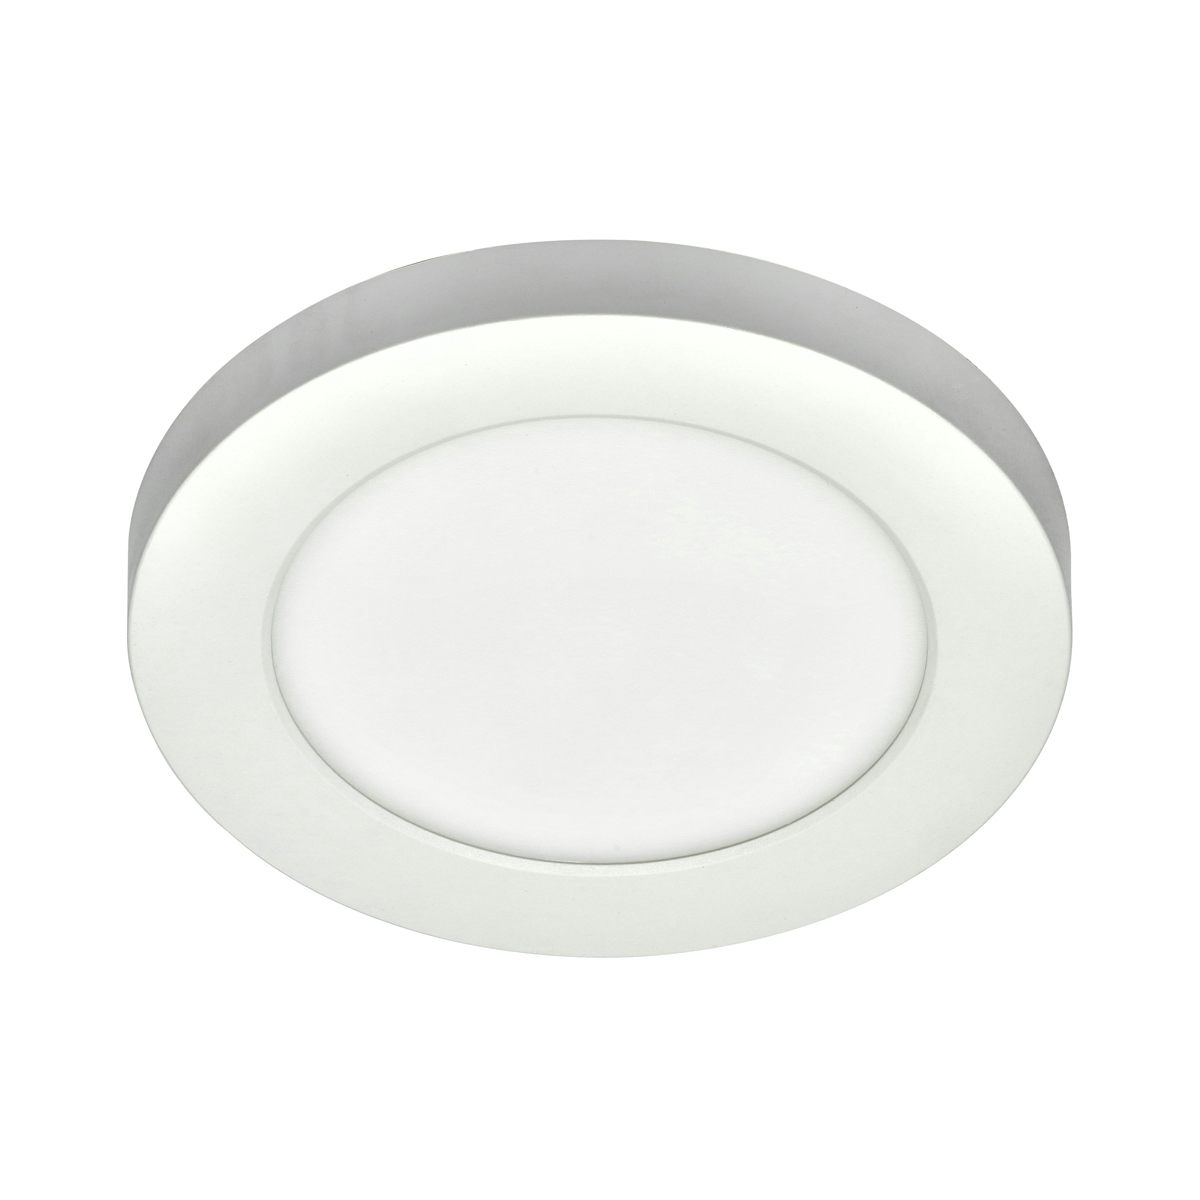 Forum Theta white small round flush bathroom ceiling light